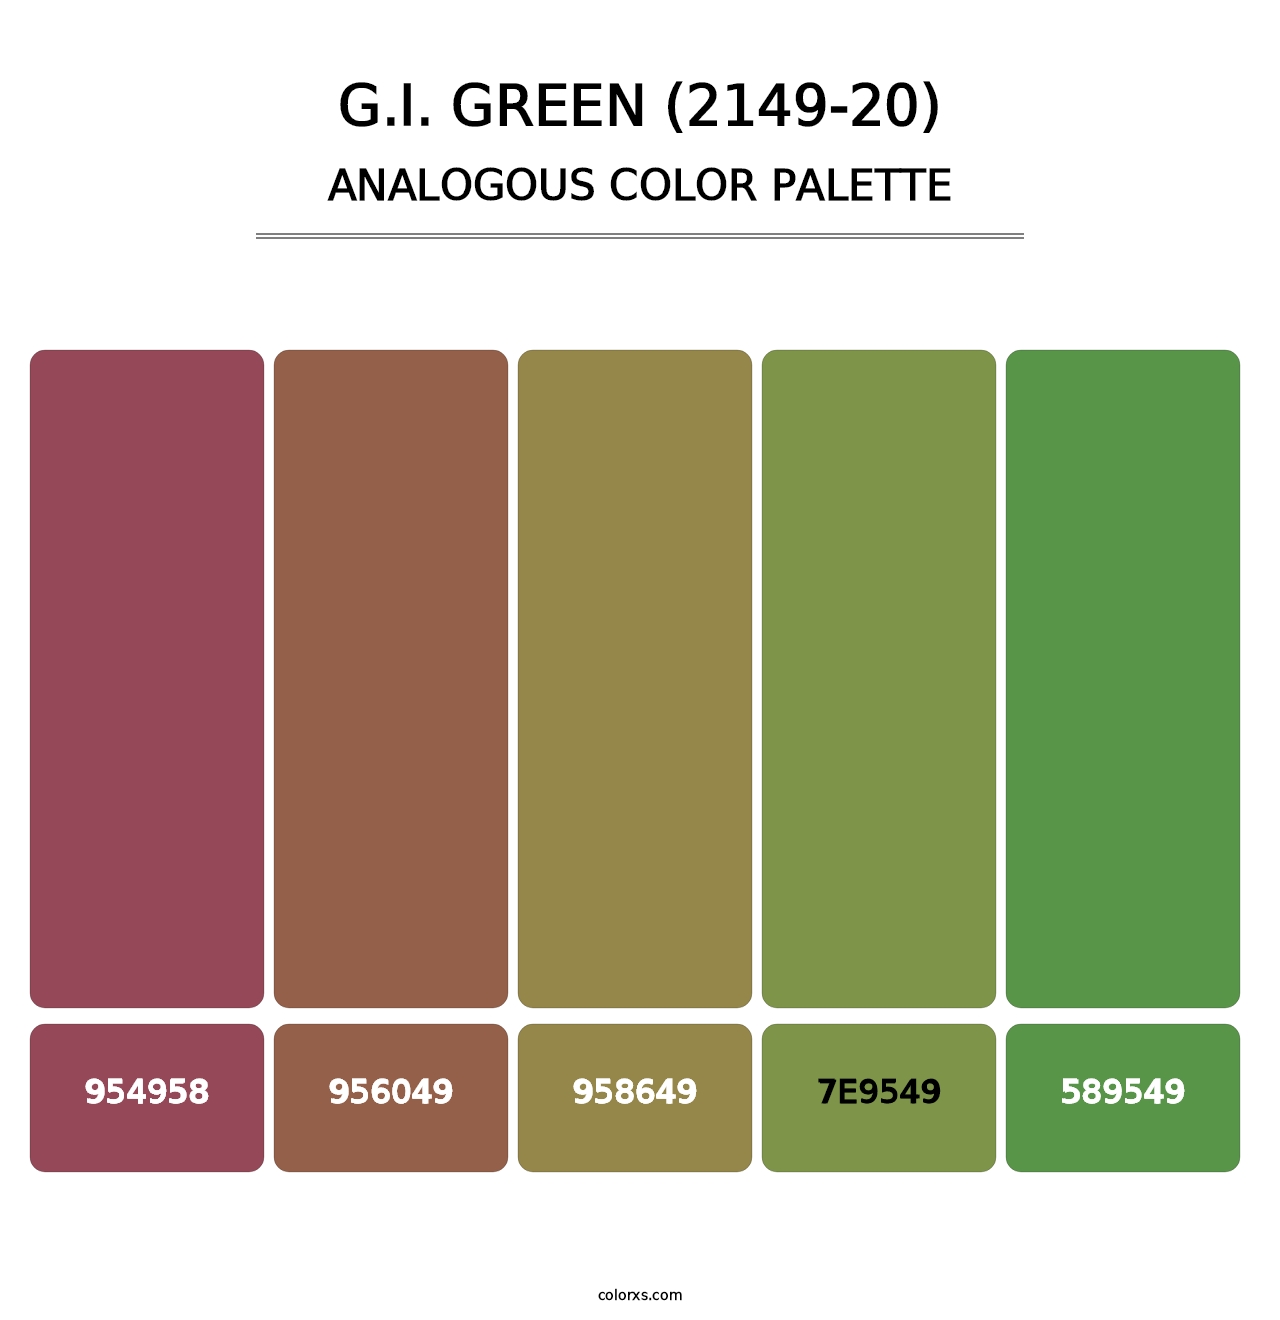 G.I. Green (2149-20) - Analogous Color Palette